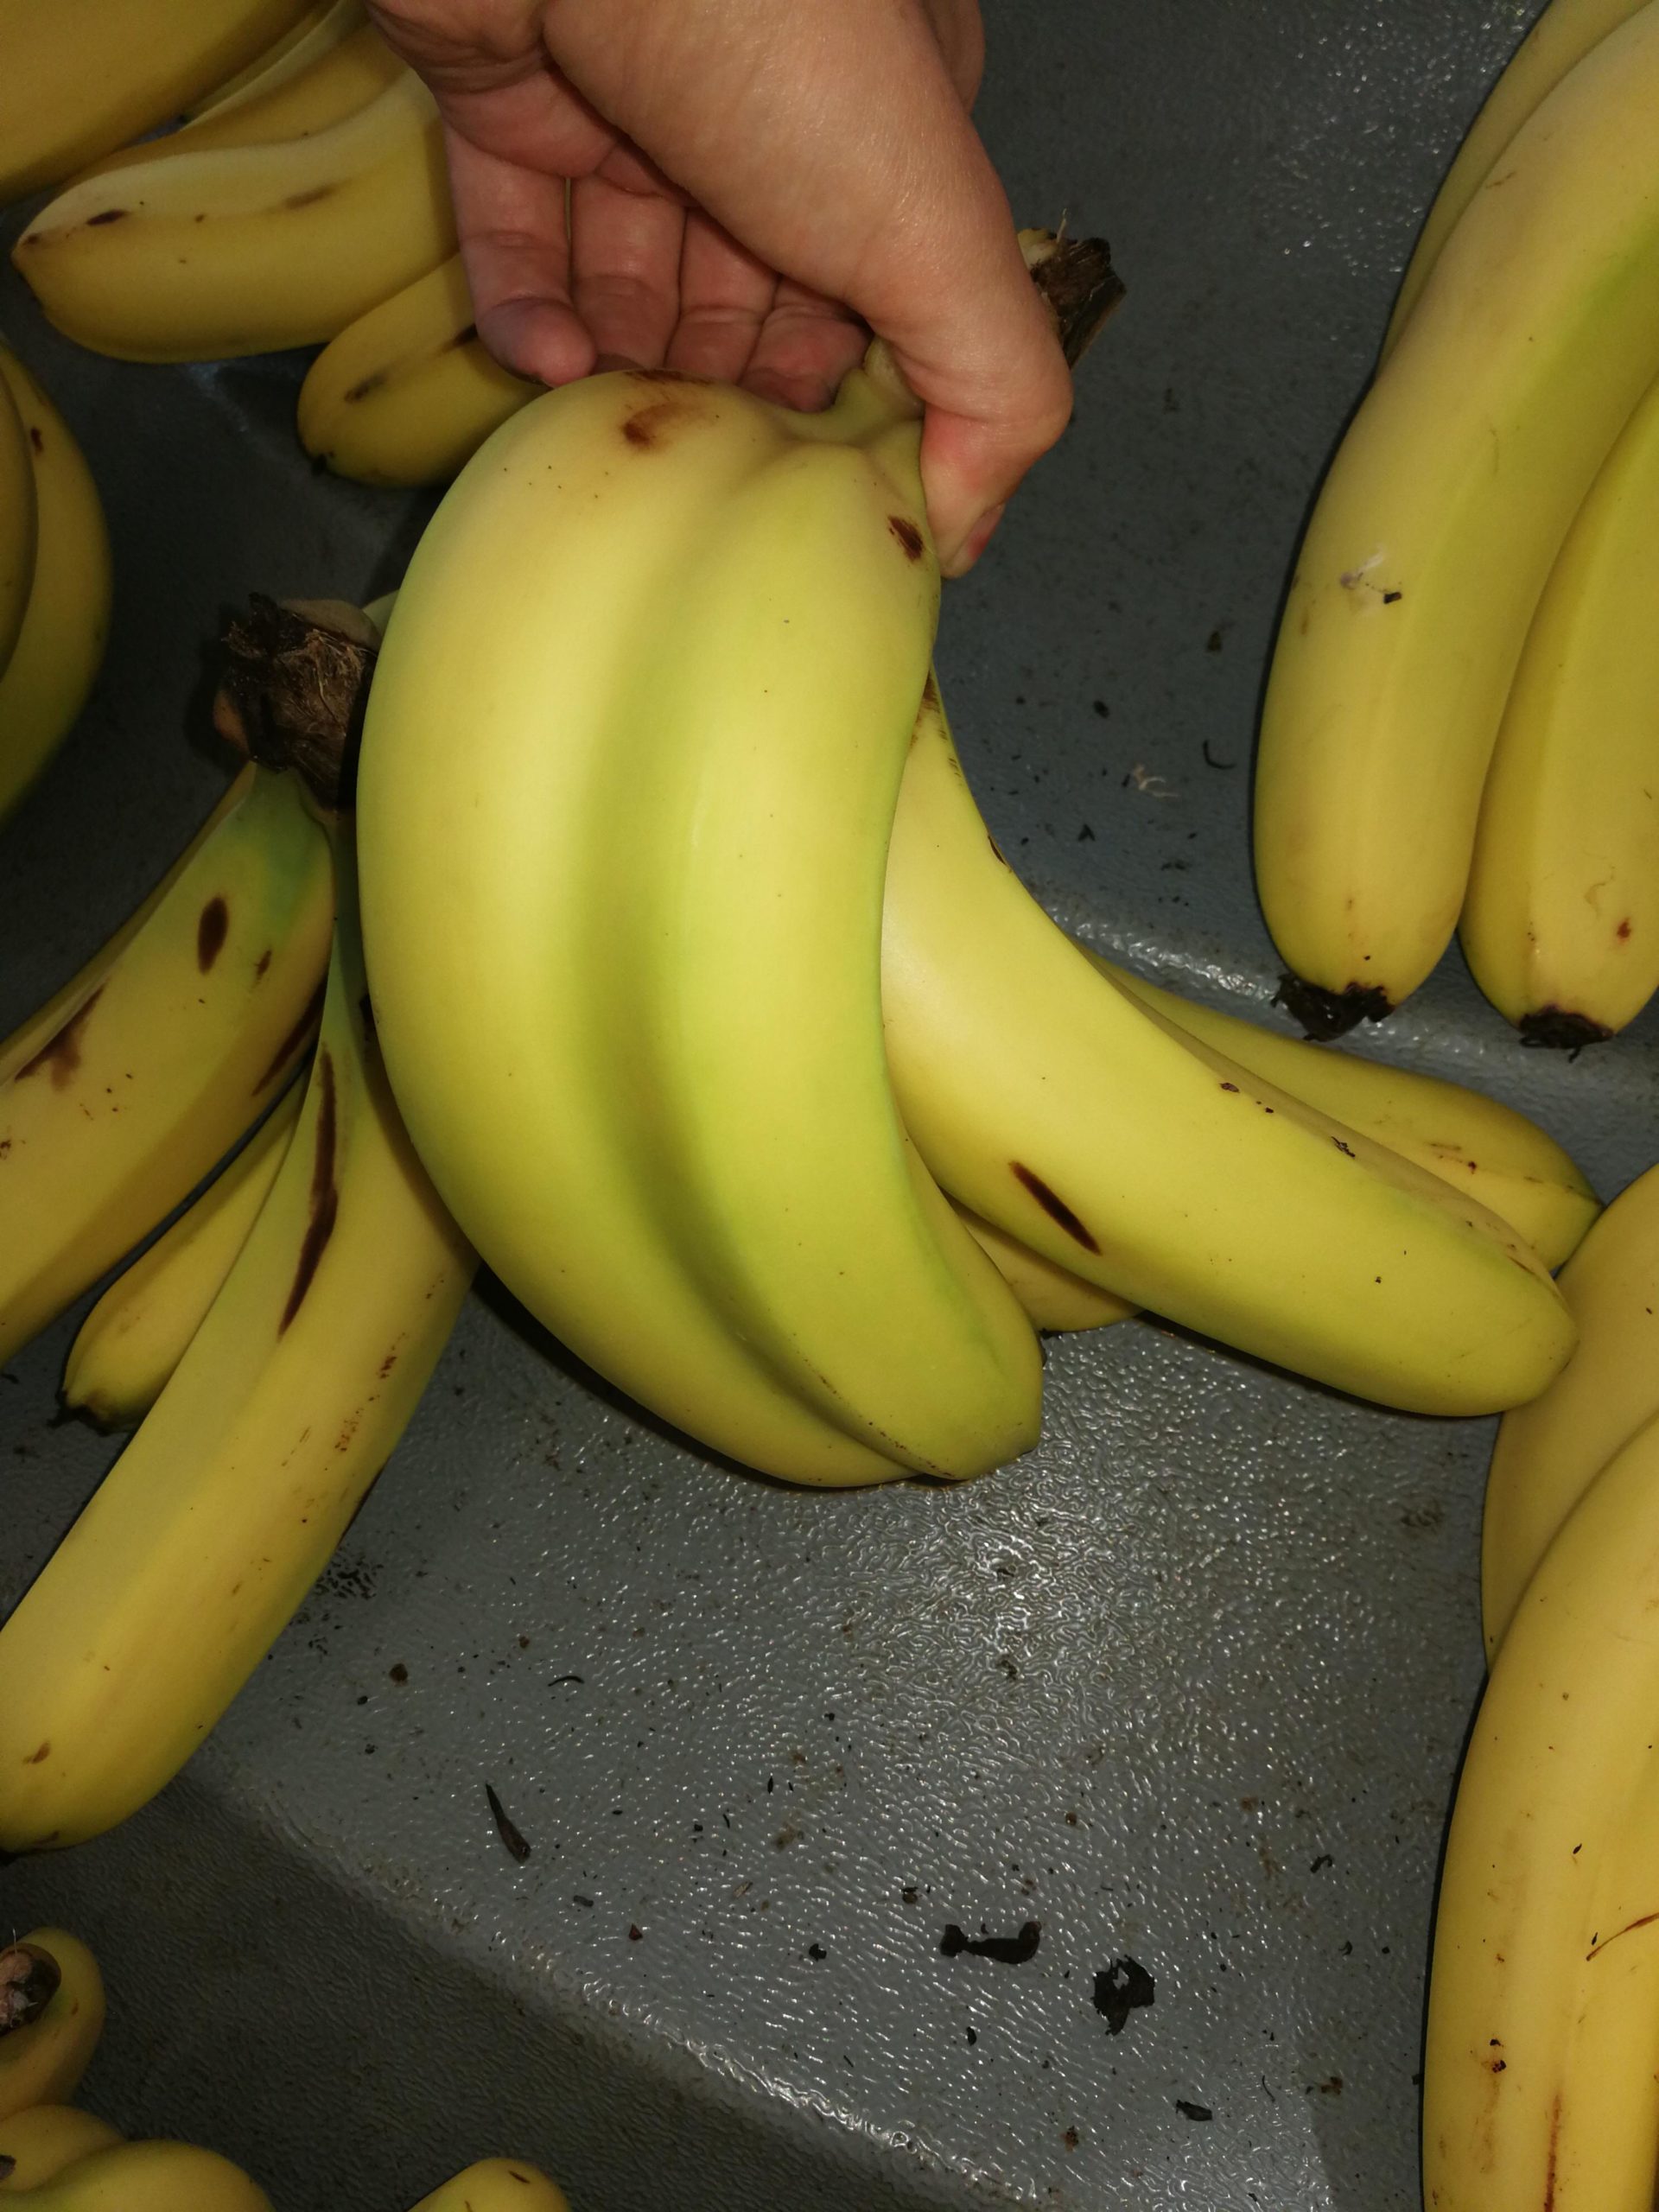 Two+bananas+one+peel